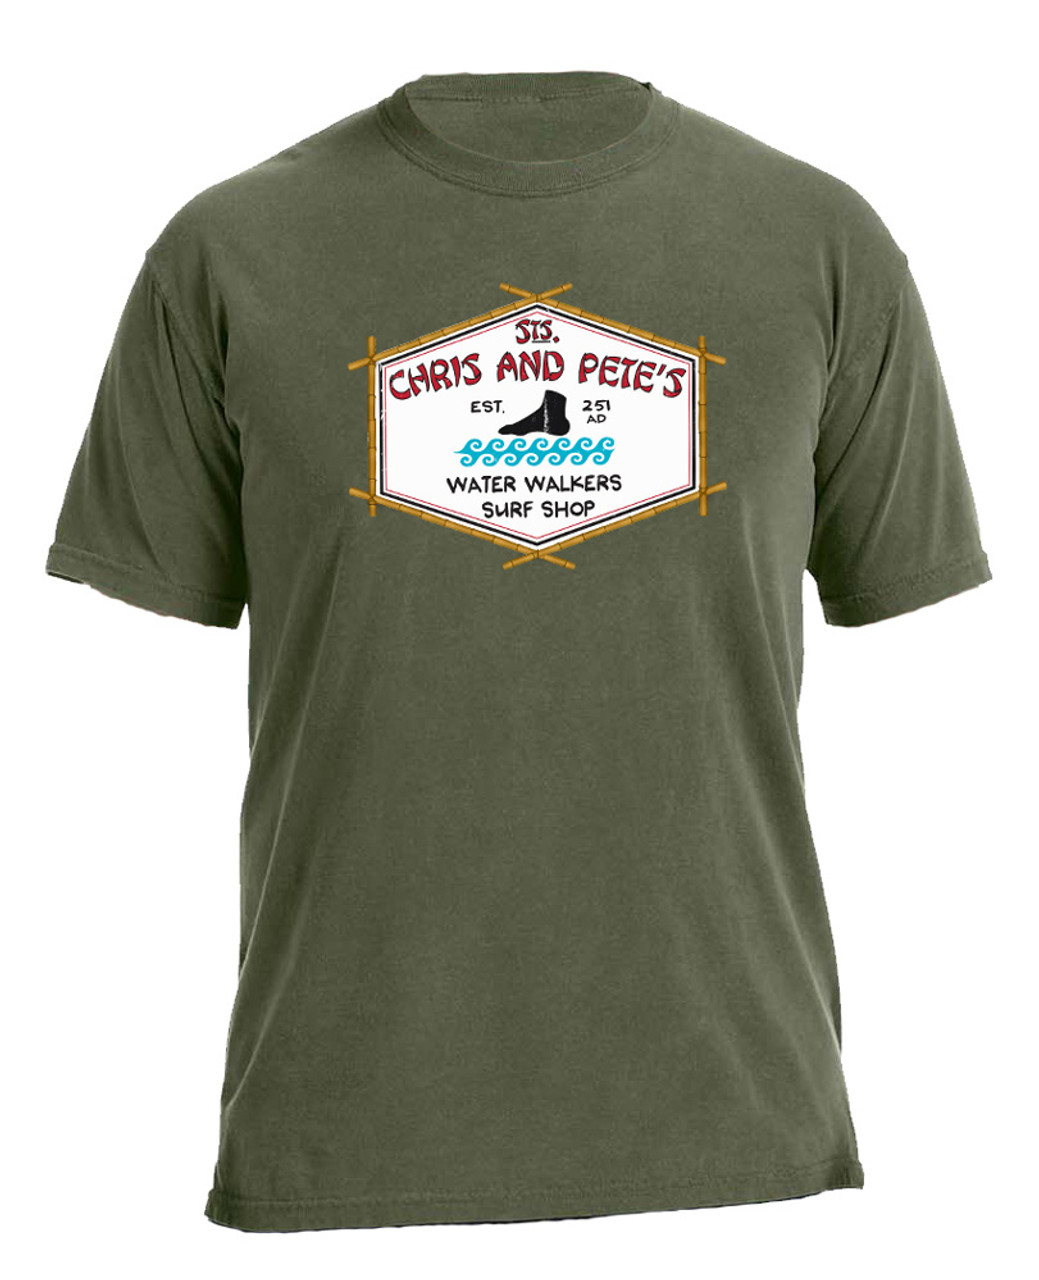 Sts. Chris and Pete's Surf Shop Hemp Green T-Shirt - Catholic to